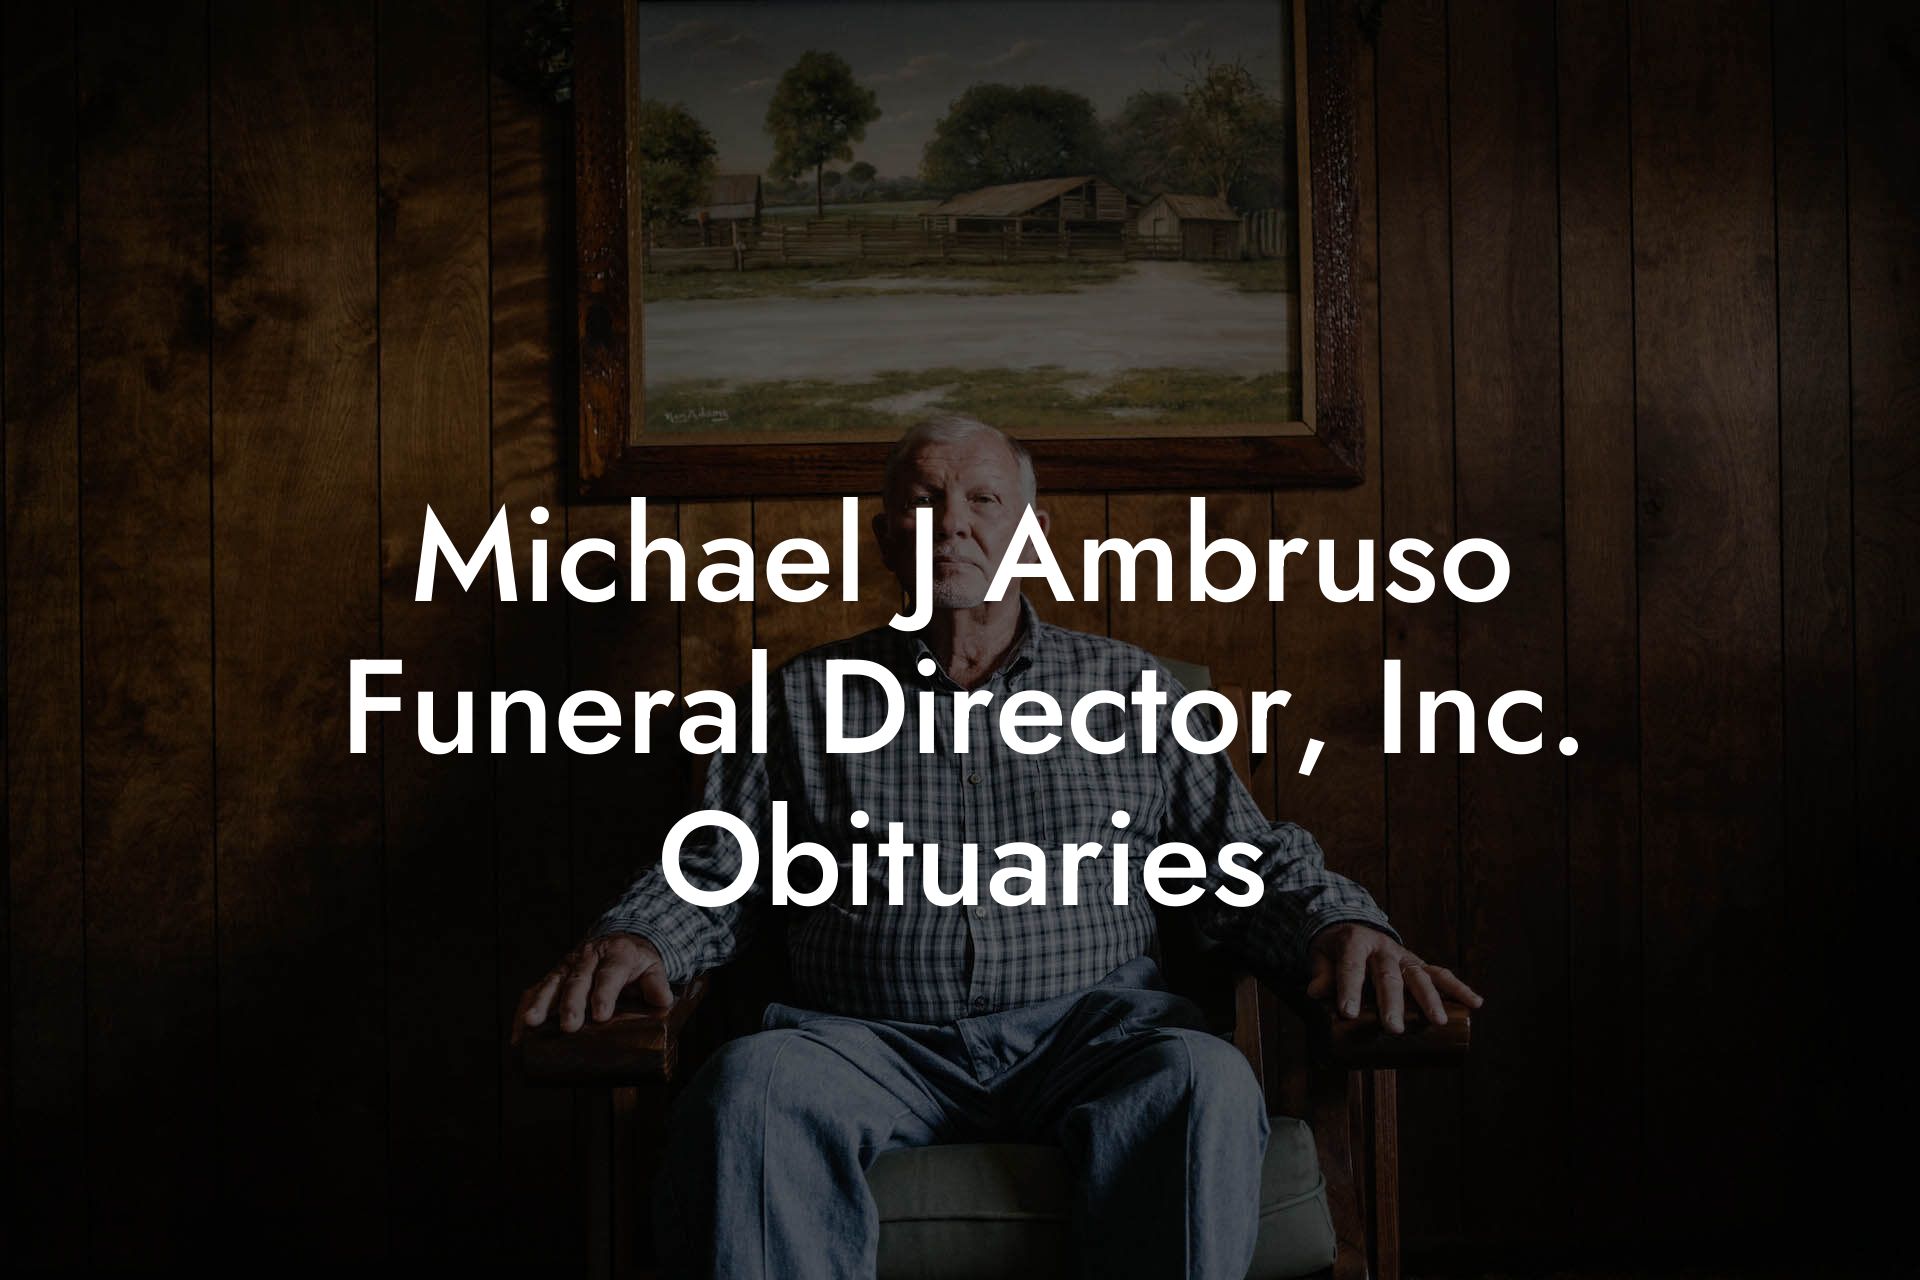 Michael J Ambruso Funeral Director, Inc. Obituaries